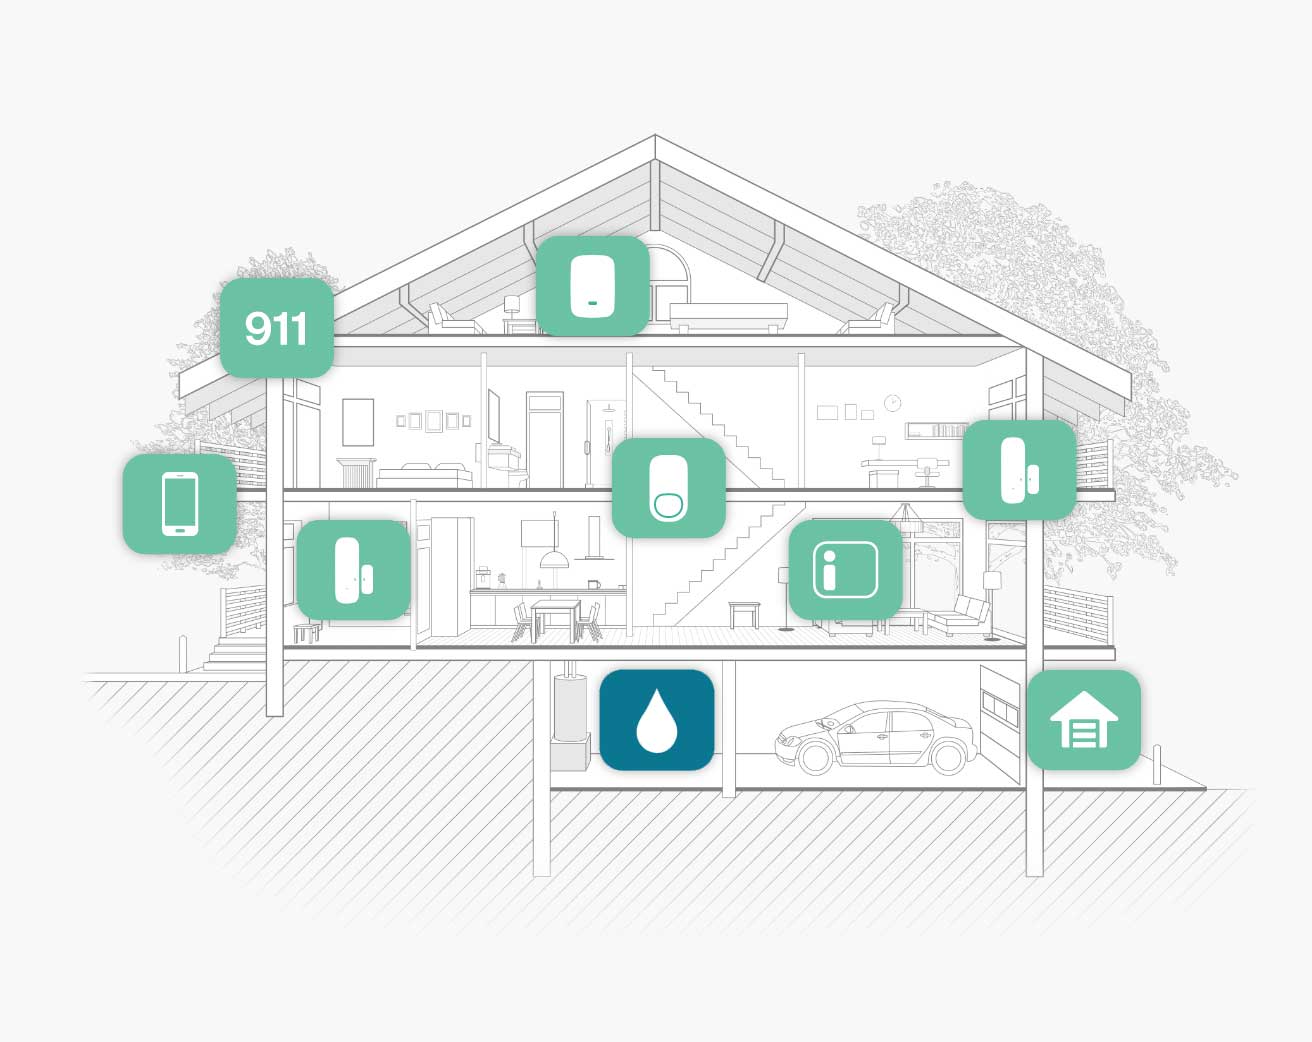 Water alarm sensor on house diagram.